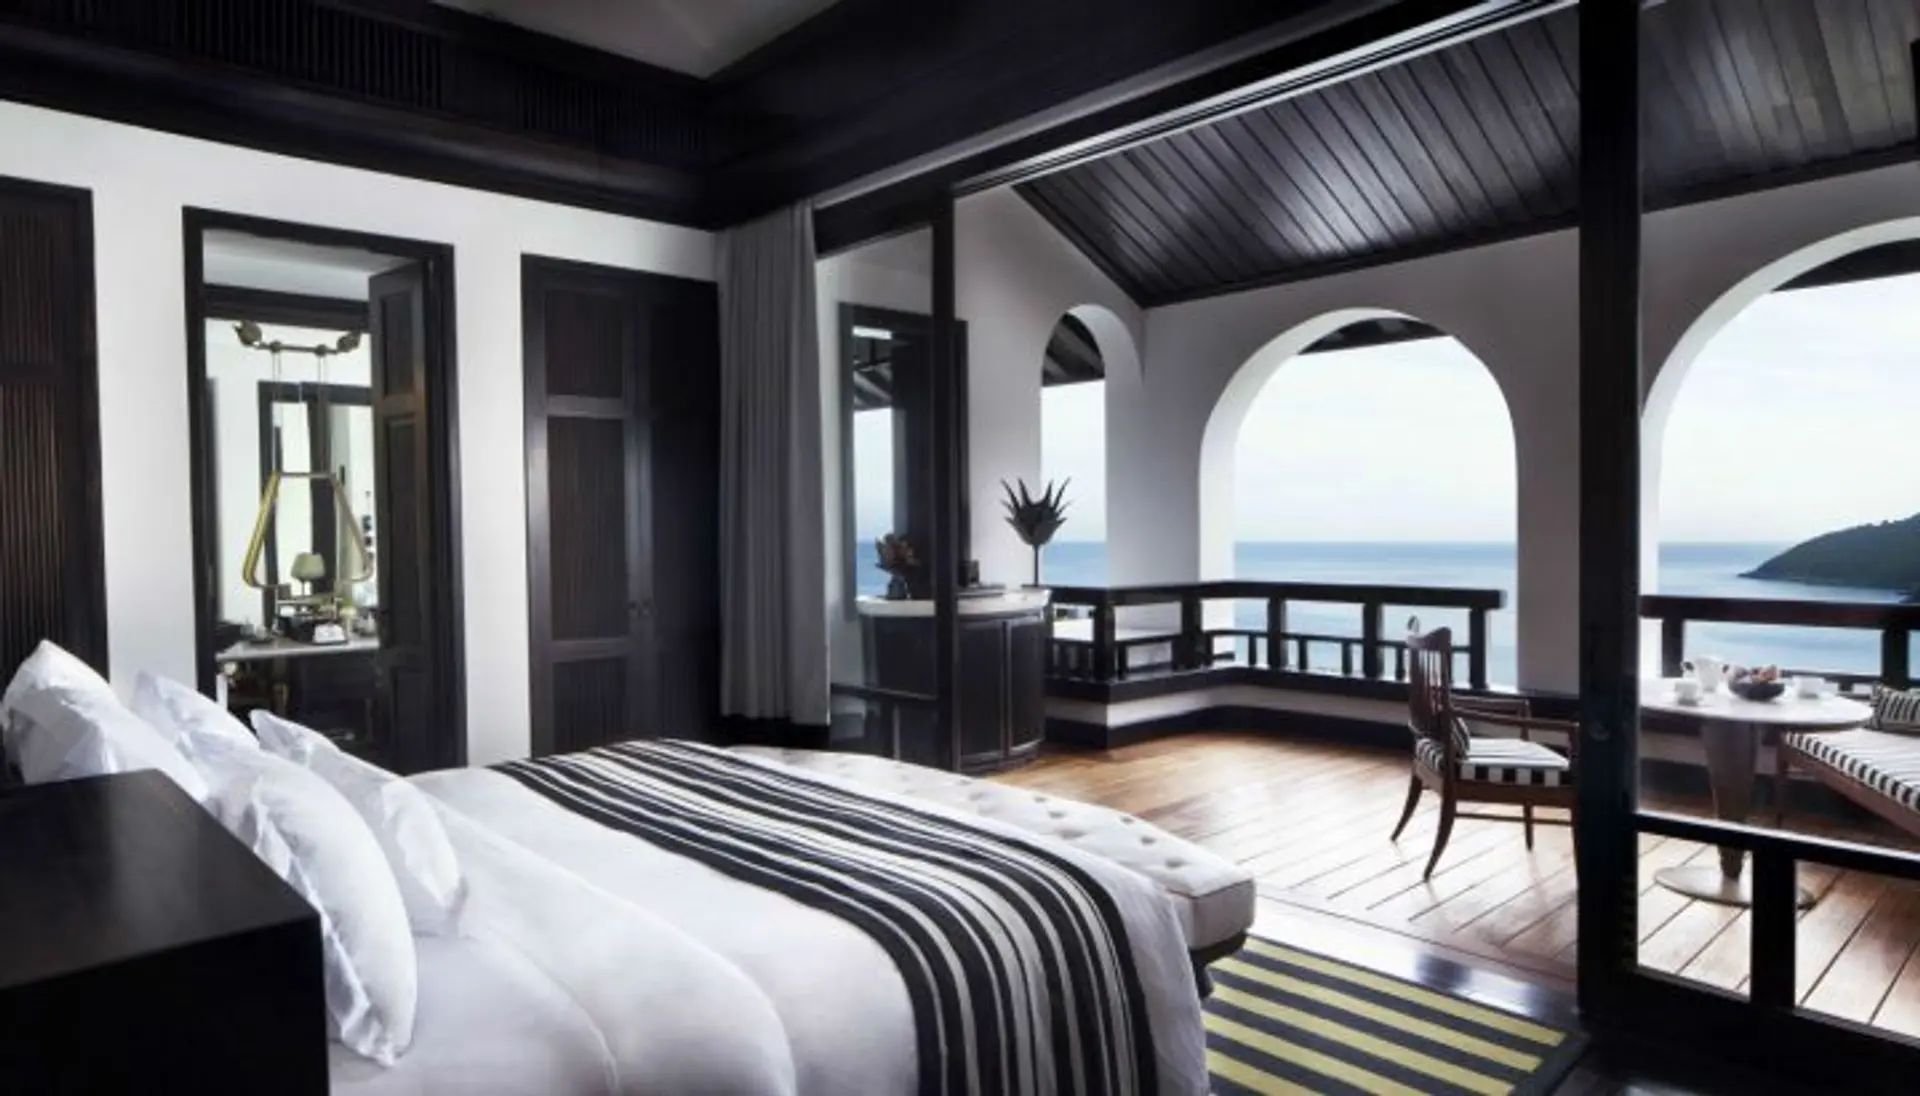 Hotels Articles - InterContinental Danang Sun Peninsula Resort, one of Vietnam’s best hotels